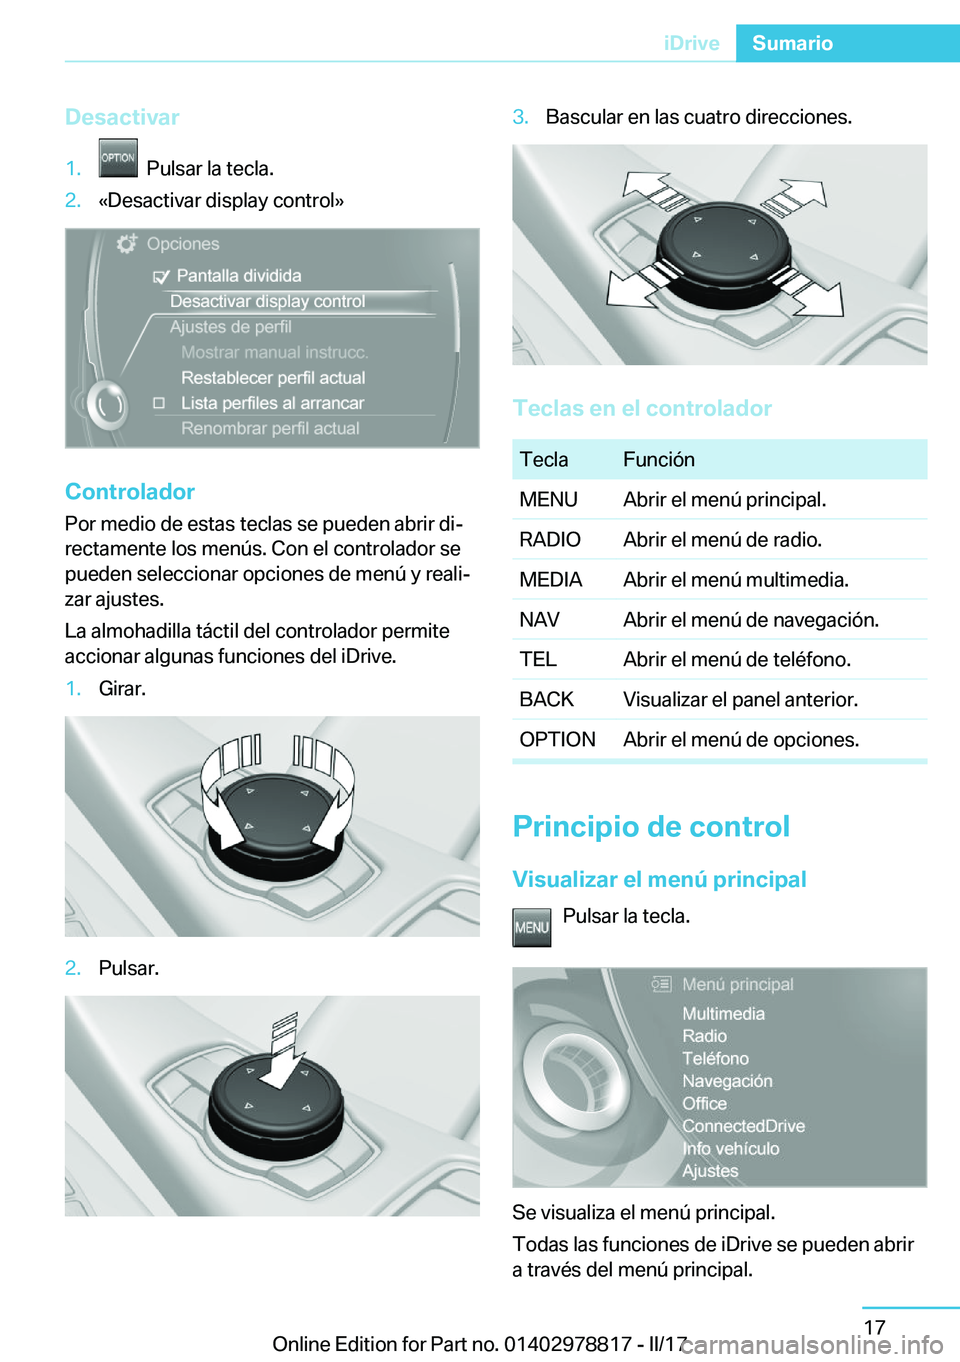 BMW I3 2017  Manuales de Empleo (in Spanish) �D�e�s�a�c�t�i�v�a�r�1�.� � �P�u�l�s�a�r� �l�a� �t�e�c�l�a�.�2�.�k�D�e�s�a�c�t�i�v�a�r� �d�i�s�p�l�a�y� �c�o�n�t�r�o�l�{
�C�o�n�t�r�o�l�a�d�o�r
�P�o�r� �m�e�d�i�o� �d�e� �e�s�t�a�s� �t�e�c�l�a�s� �s�e